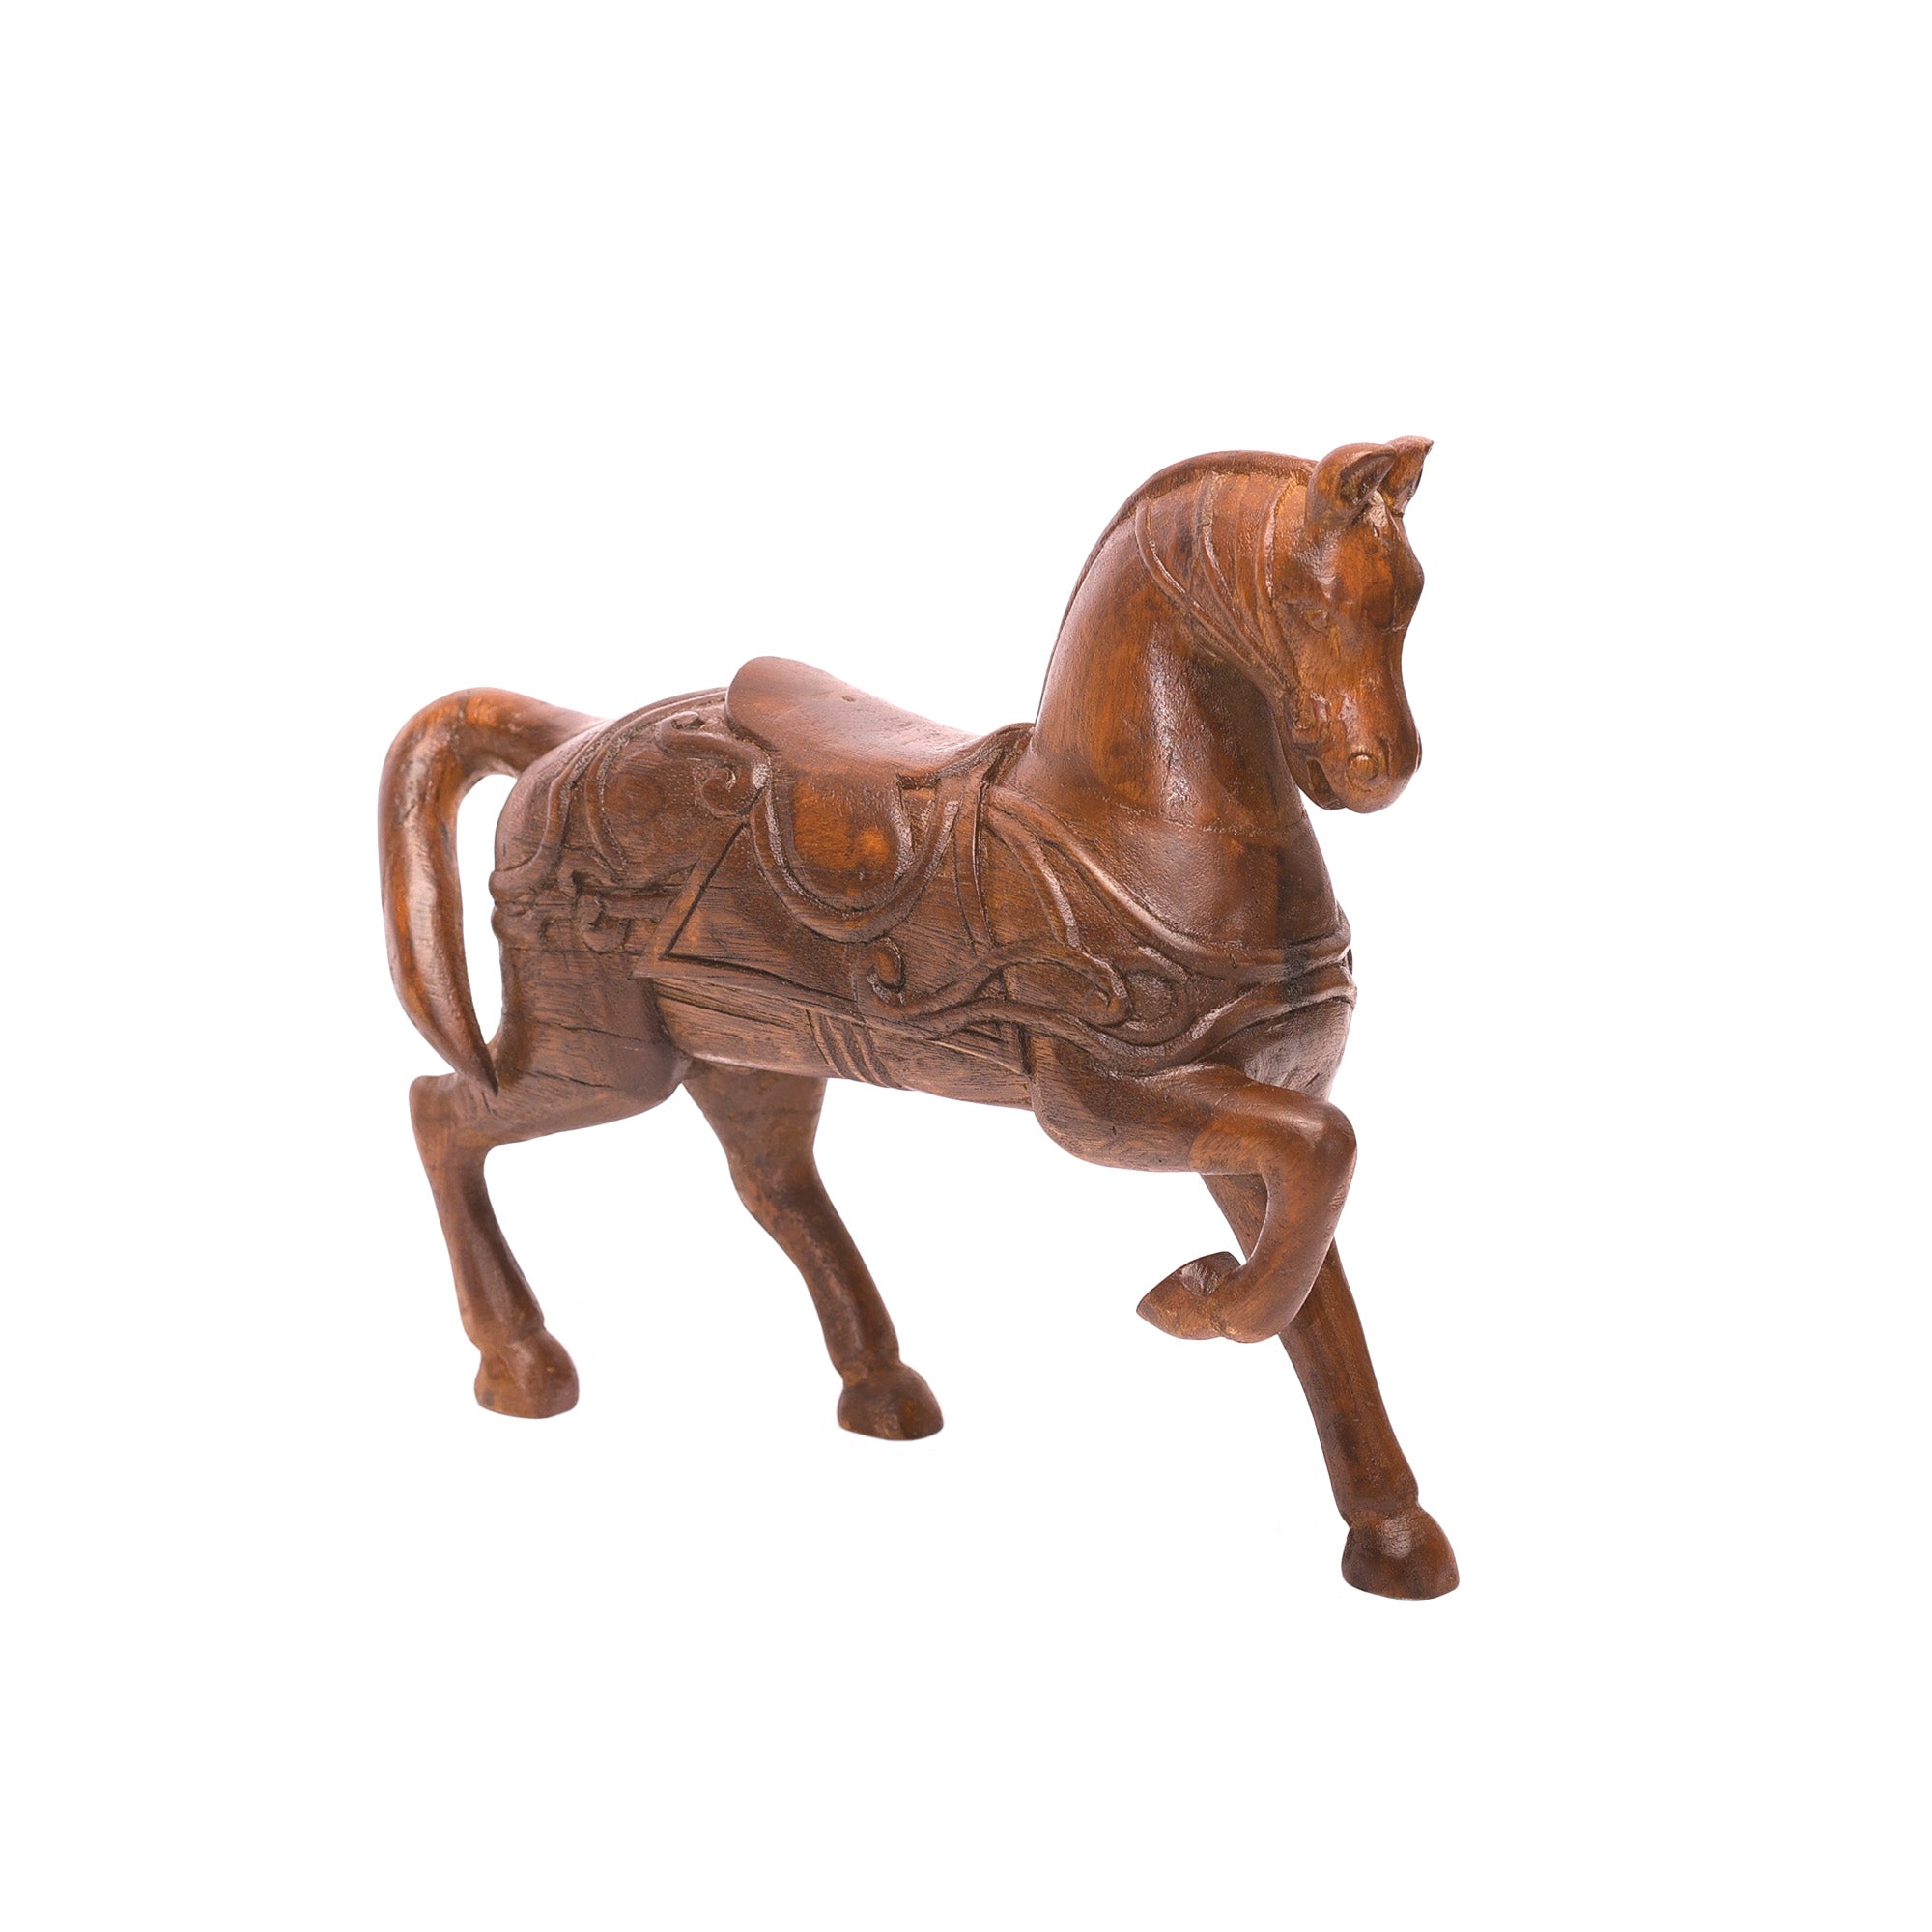 Trotting Wooden Horse Animal Figurine